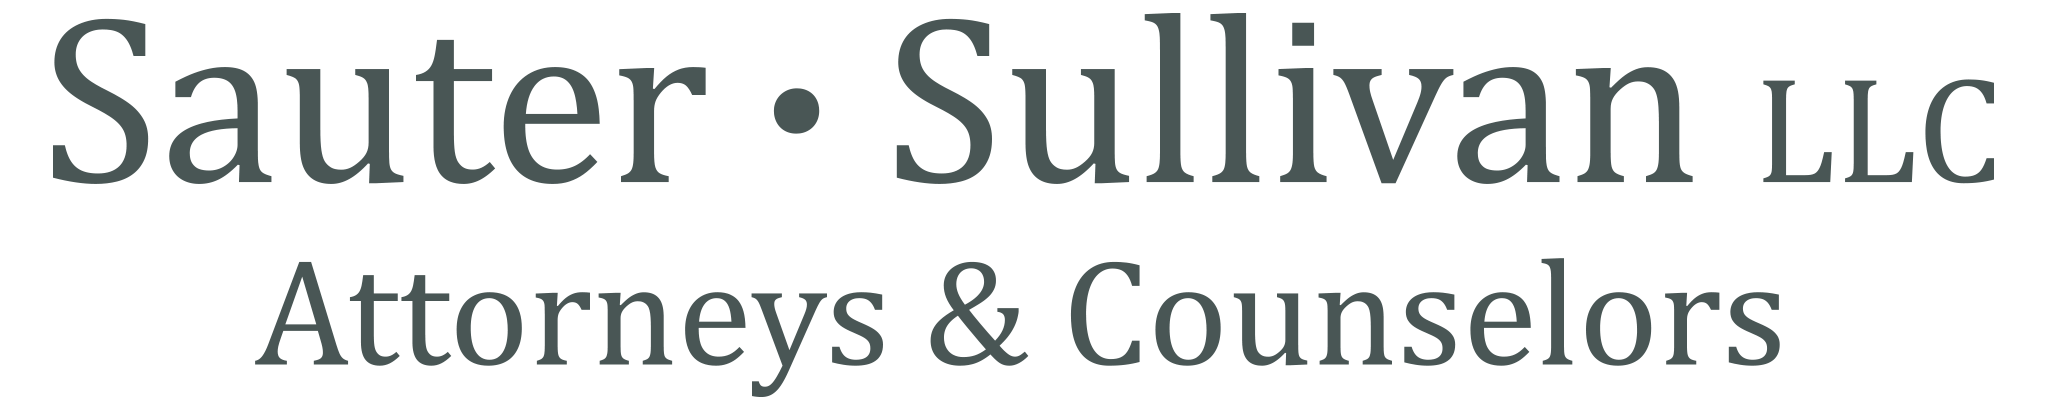 sauter-sullivan-logo-centered-dark-green--transparent